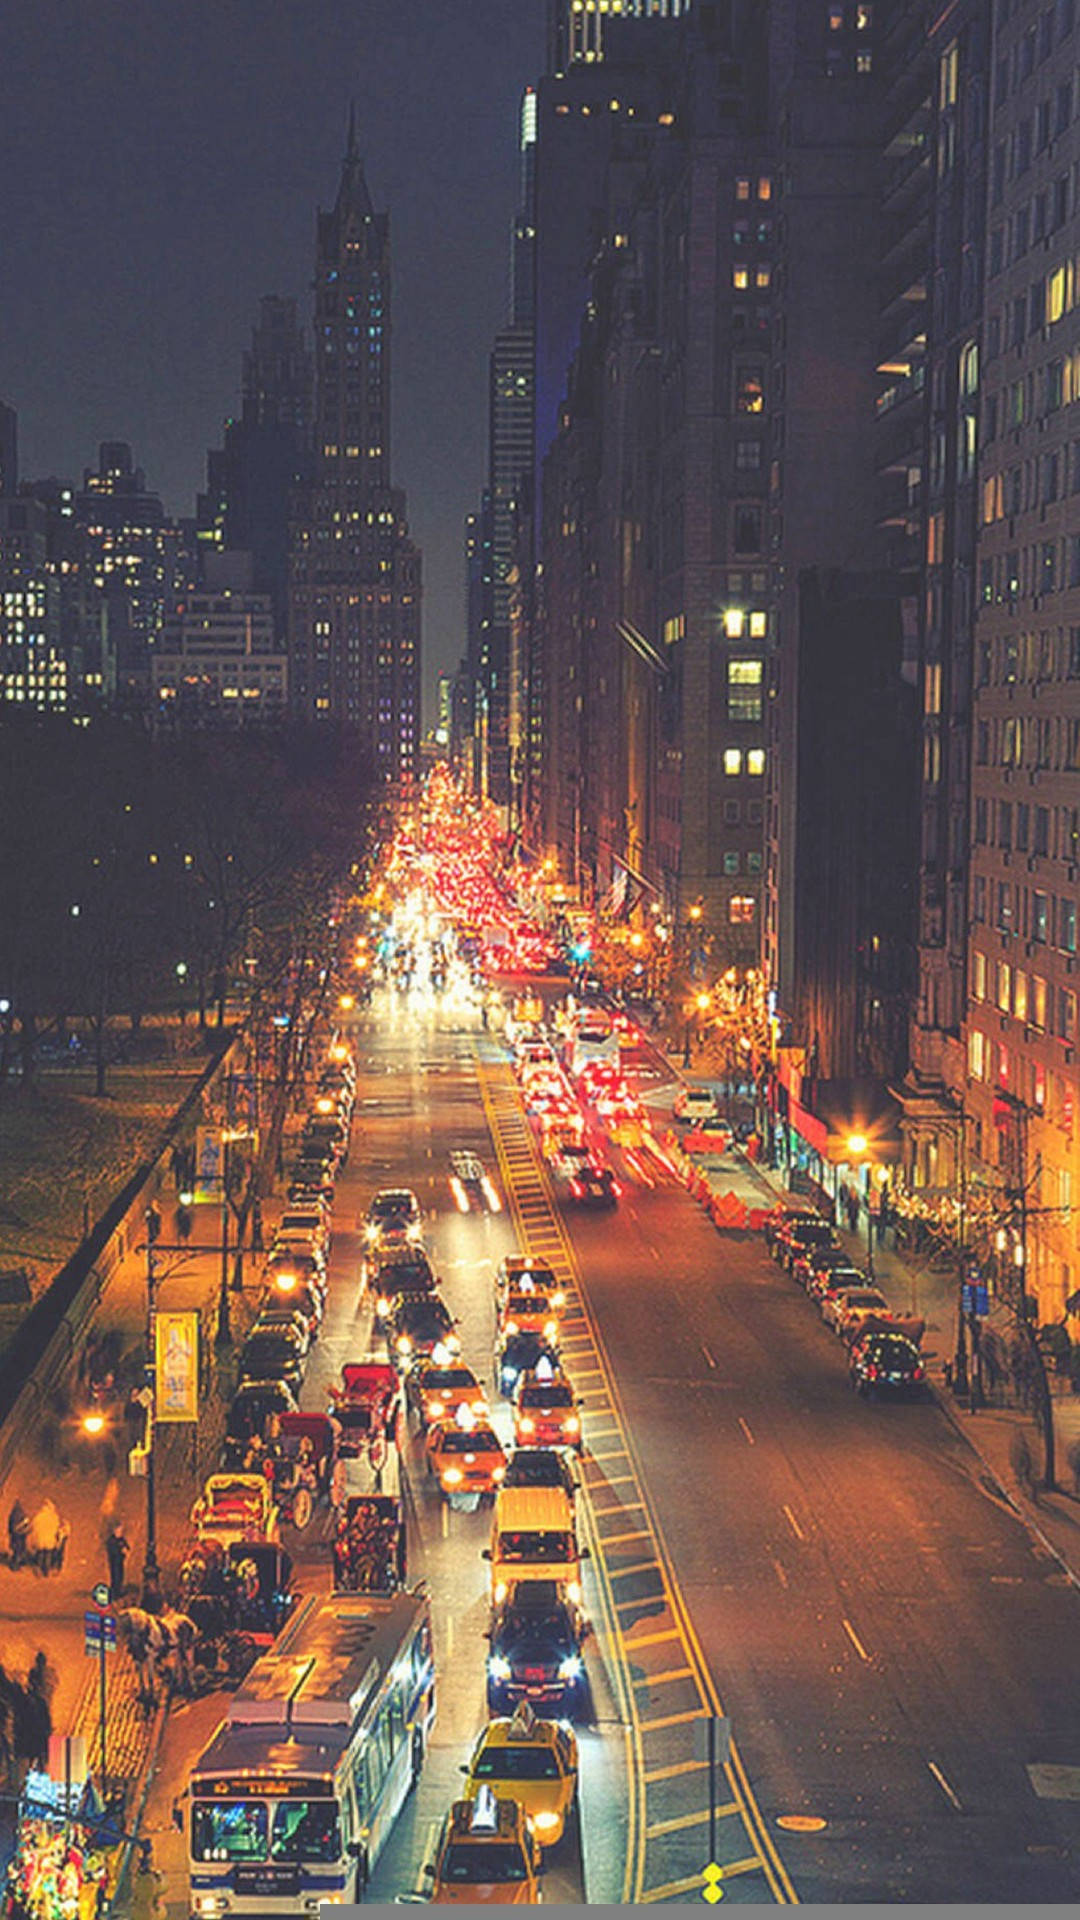 Illuminated Night Streets of New York City Captured through an iPhone X Wallpaper